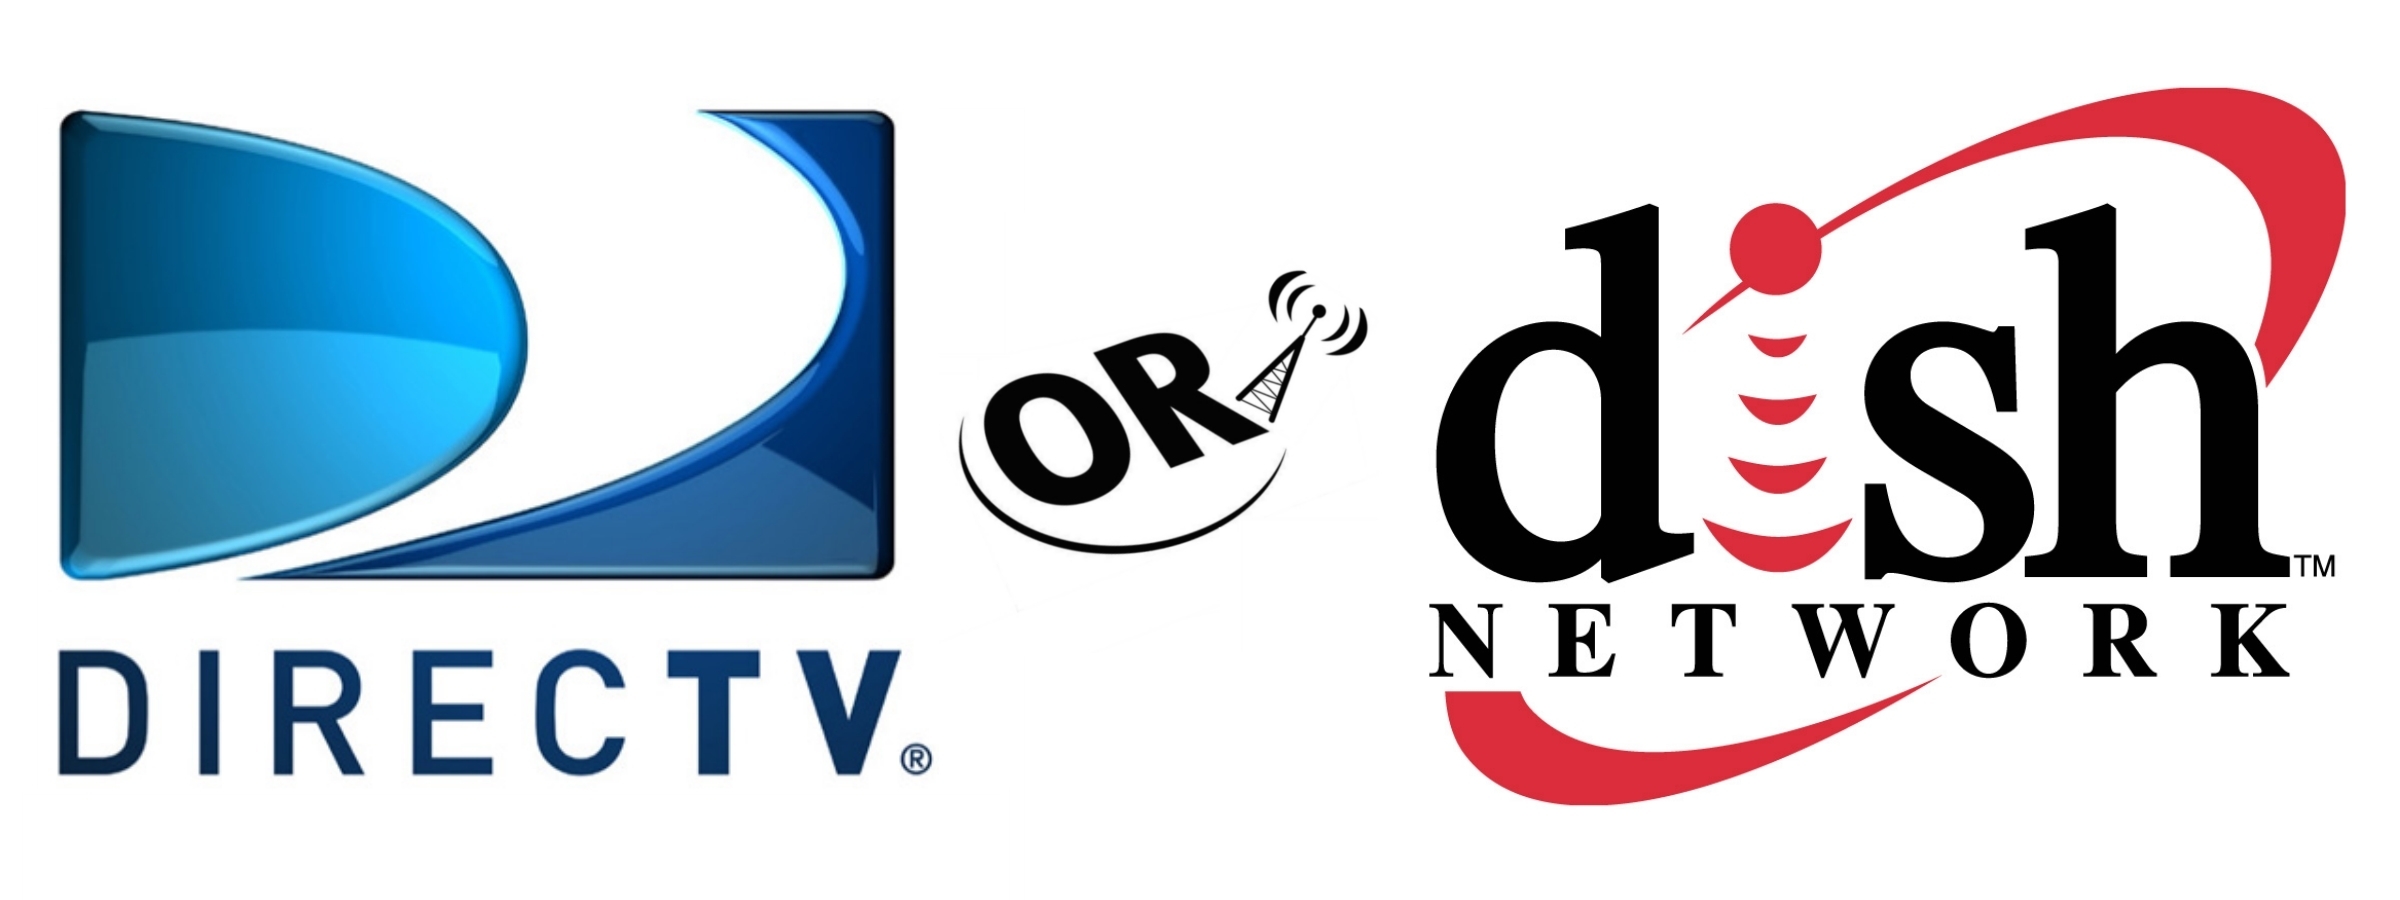 Dish Network or DirecTV